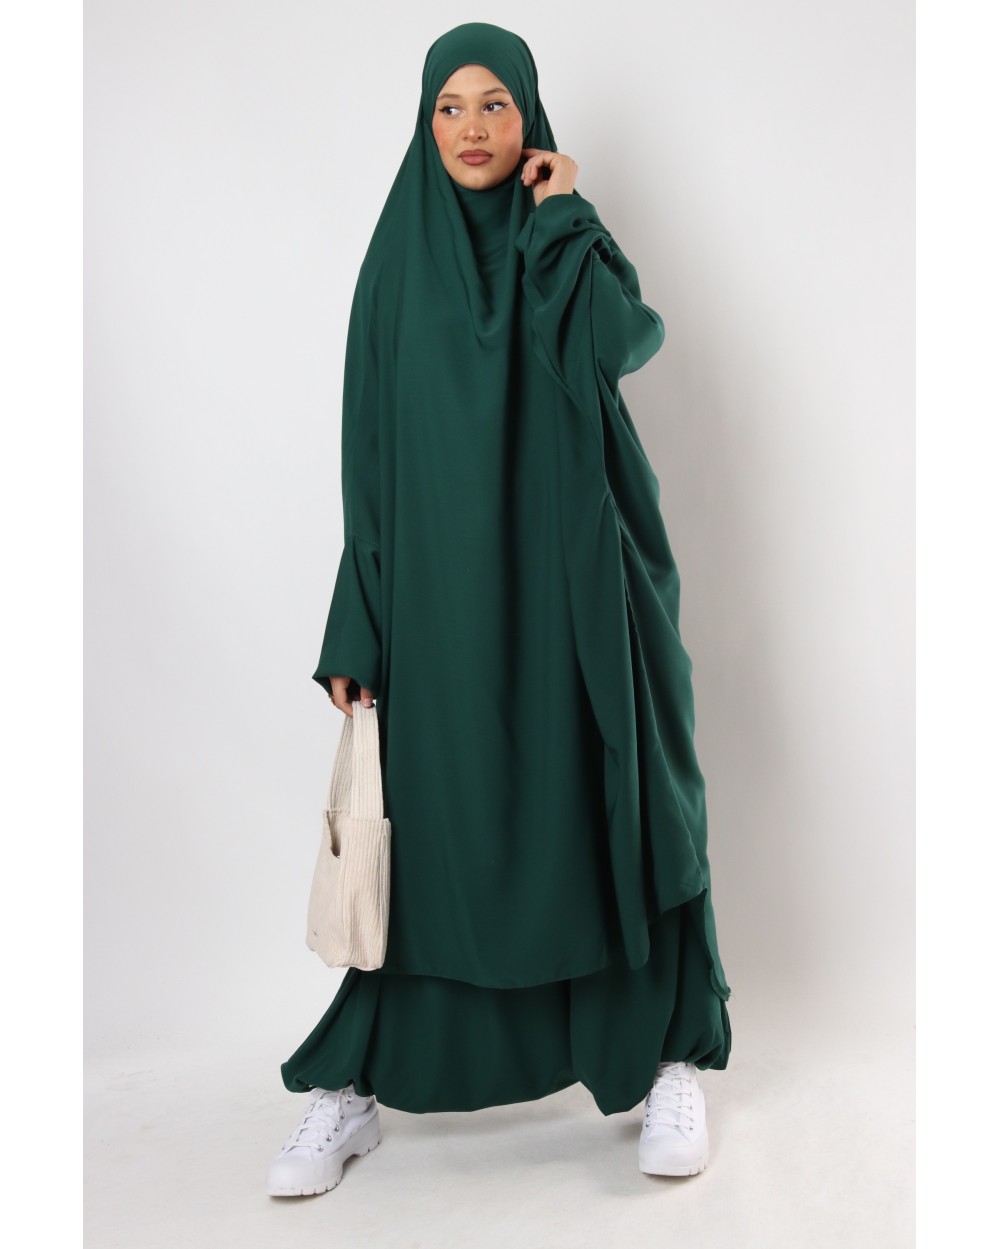 Nafissa jilbab and harem pants set ...